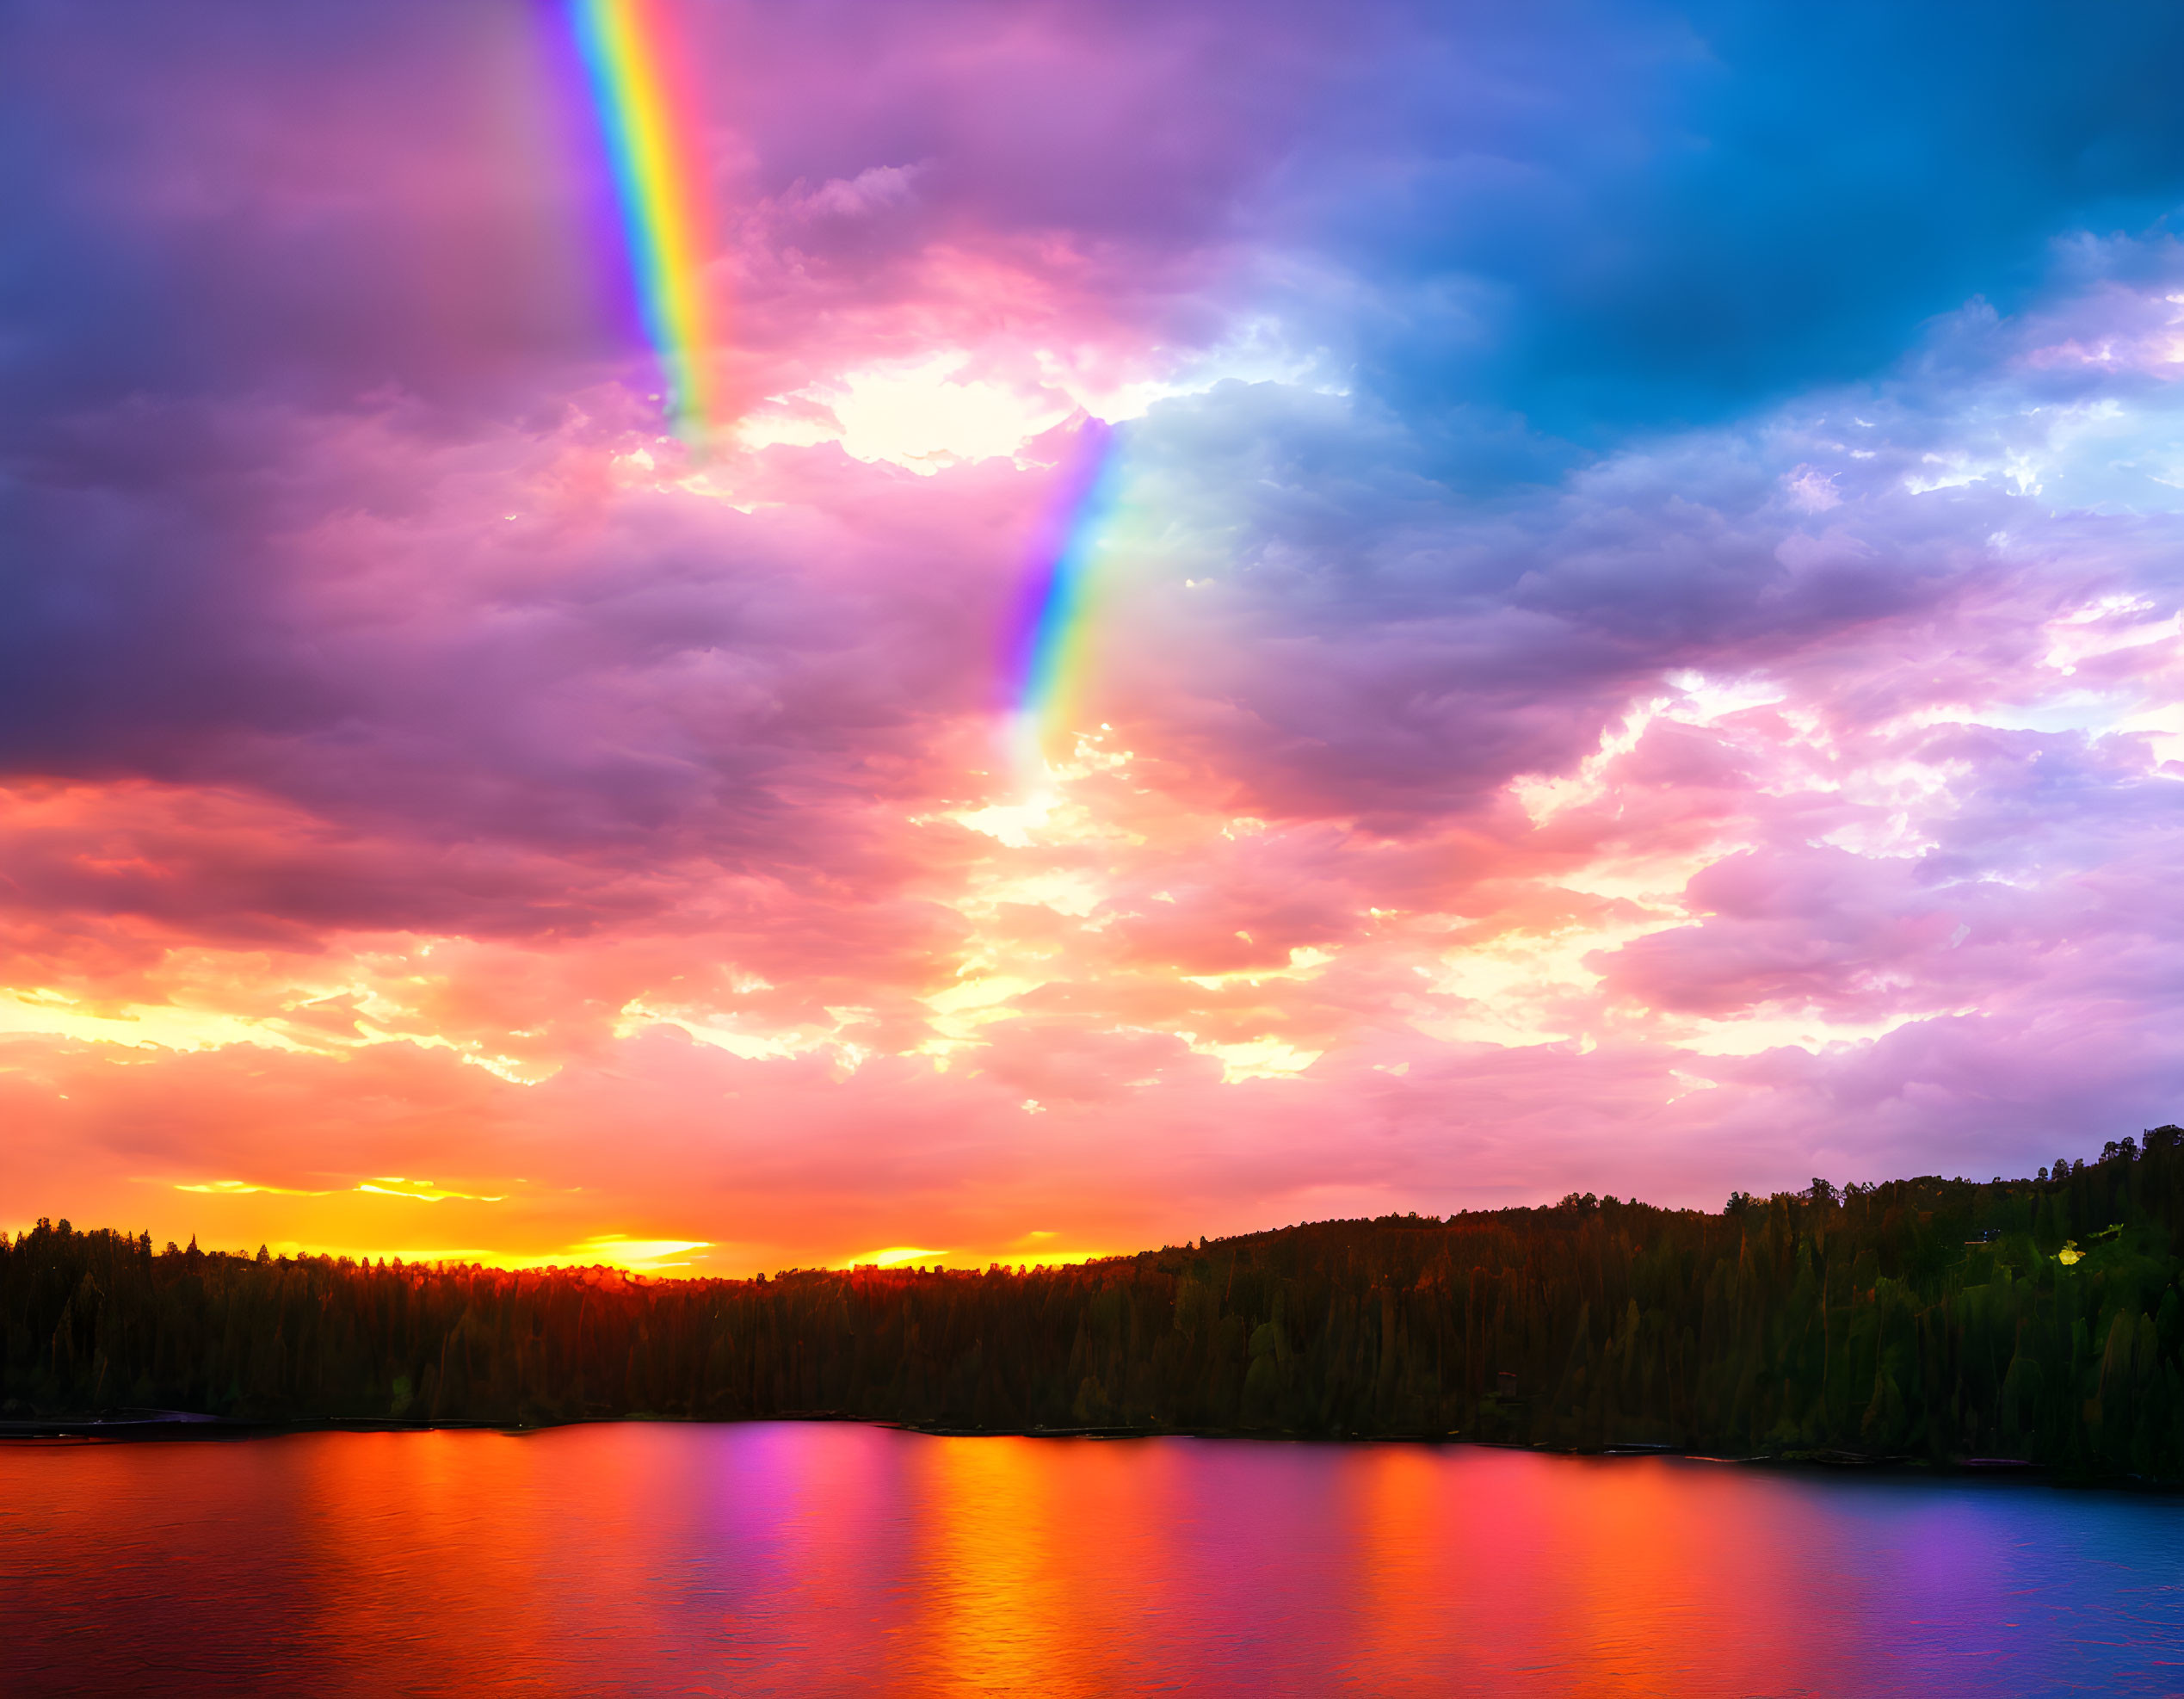 Tranquil lake with vivid sunset, double rainbow, purple and orange sky